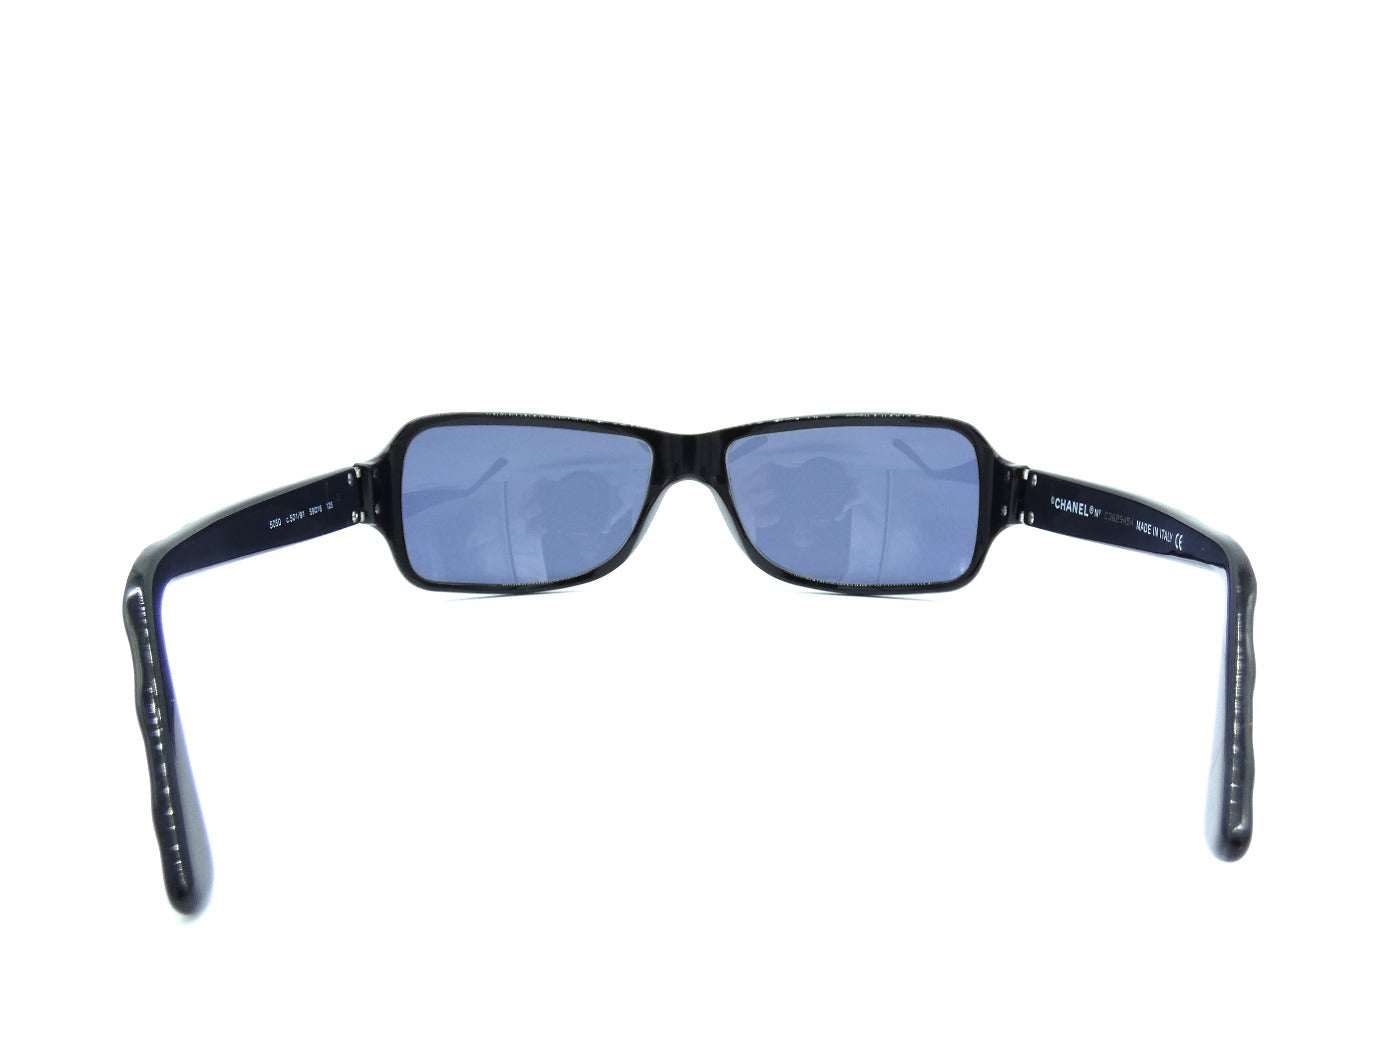 Chanel Black Sunglasses w/ CC Logo